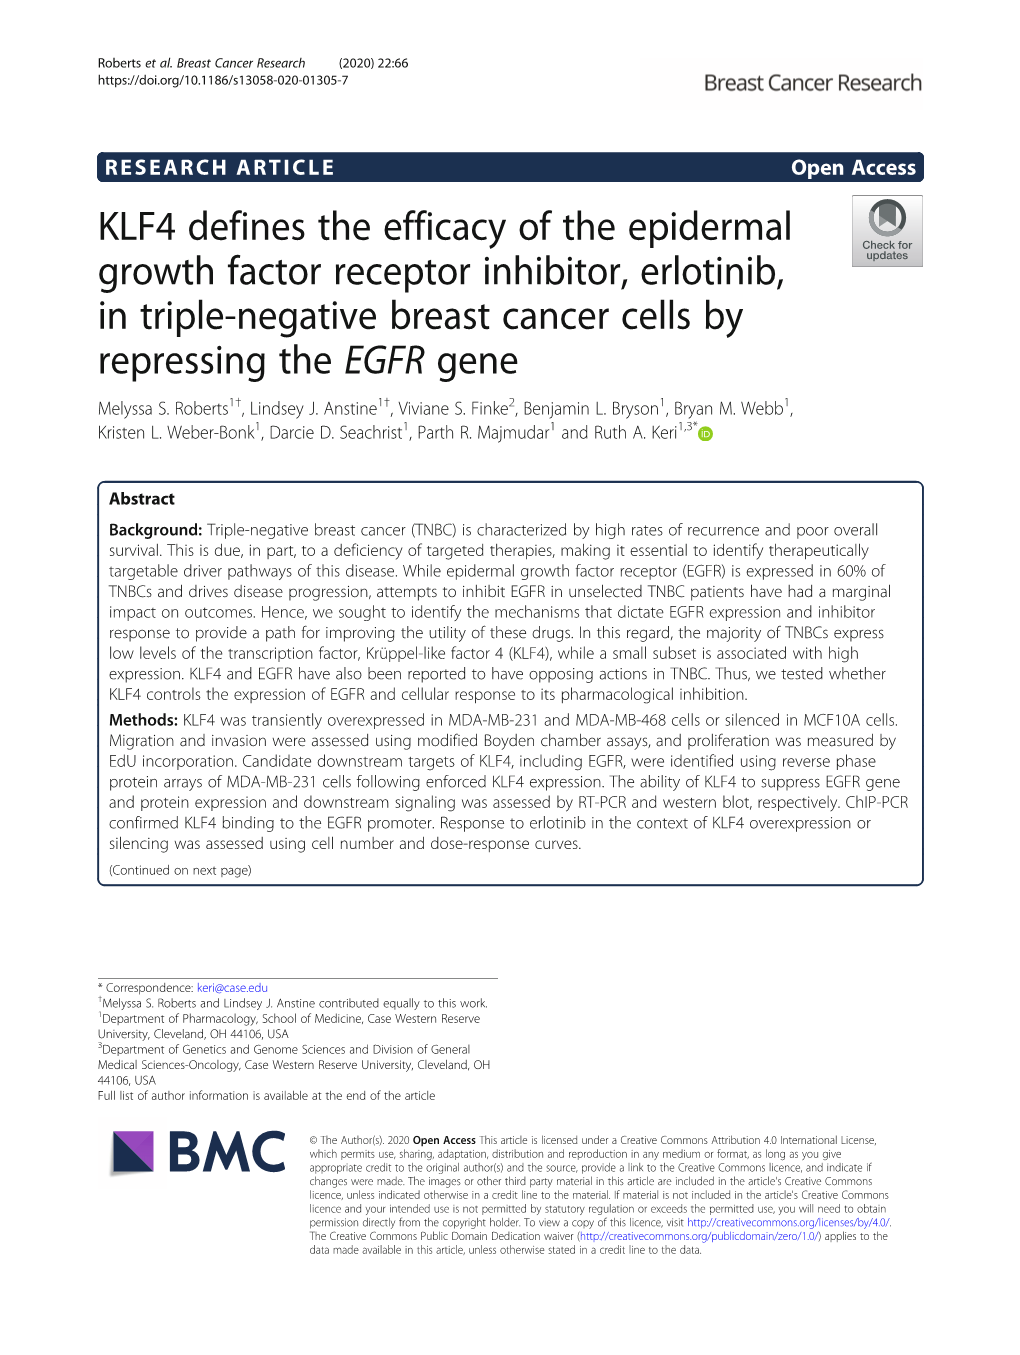 KLF4 Defines the Efficacy of the Epidermal Growth Factor Receptor Inhibitor, Erlotinib, in Triple-Negative Breast Cancer Cells by Repressing the EGFR Gene Melyssa S